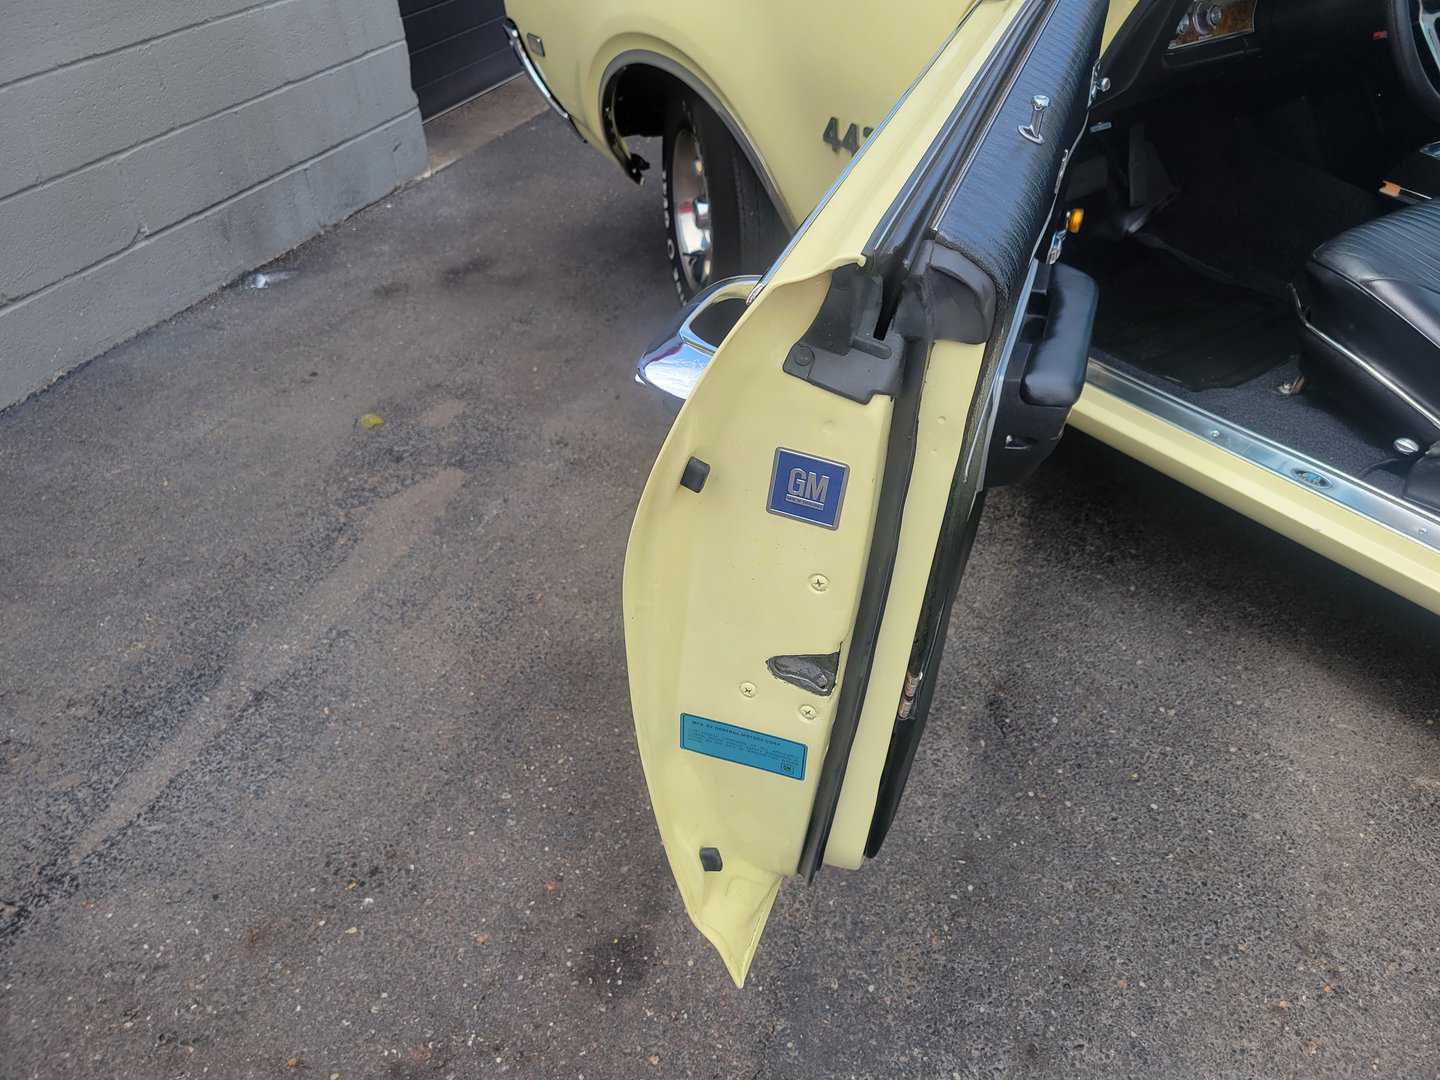 The door of a yellow 1969 Oldsmobile 442 car is open.